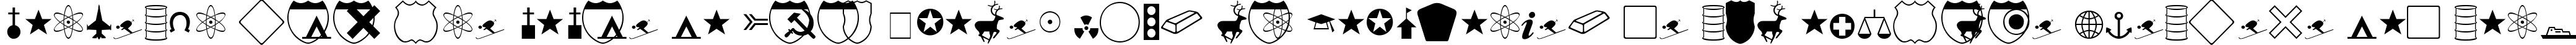 Пример написания шрифтом GeographicSymbols текста на испанском